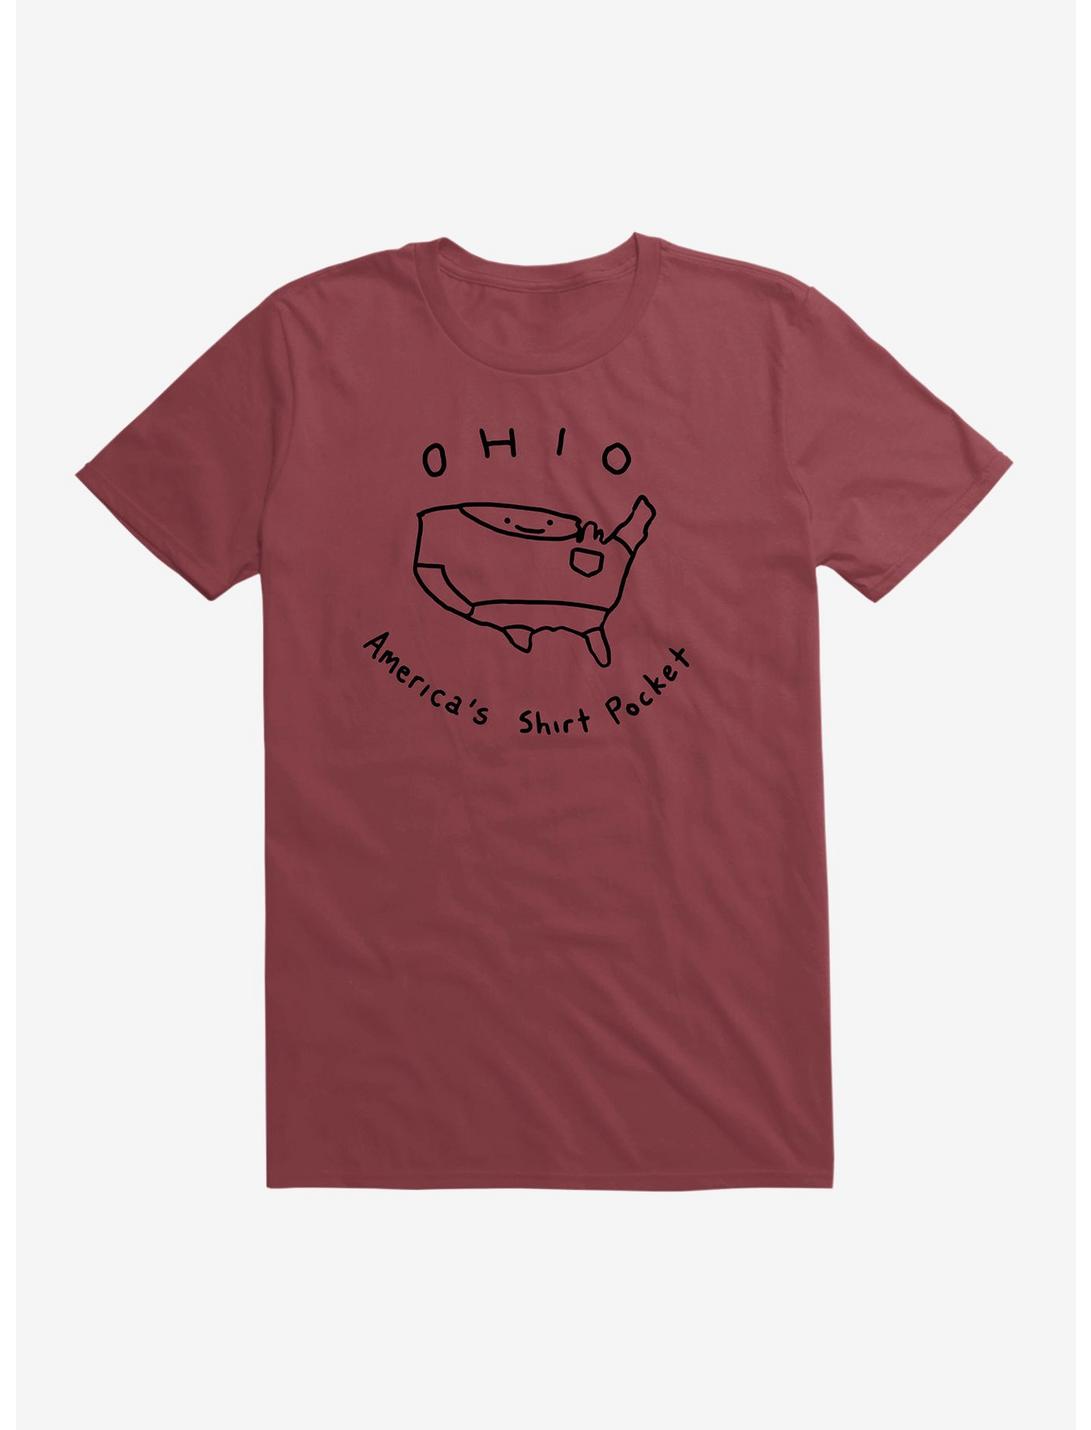 Ohio America's Shirt Pocket T-Shirt, SCARLET, hi-res